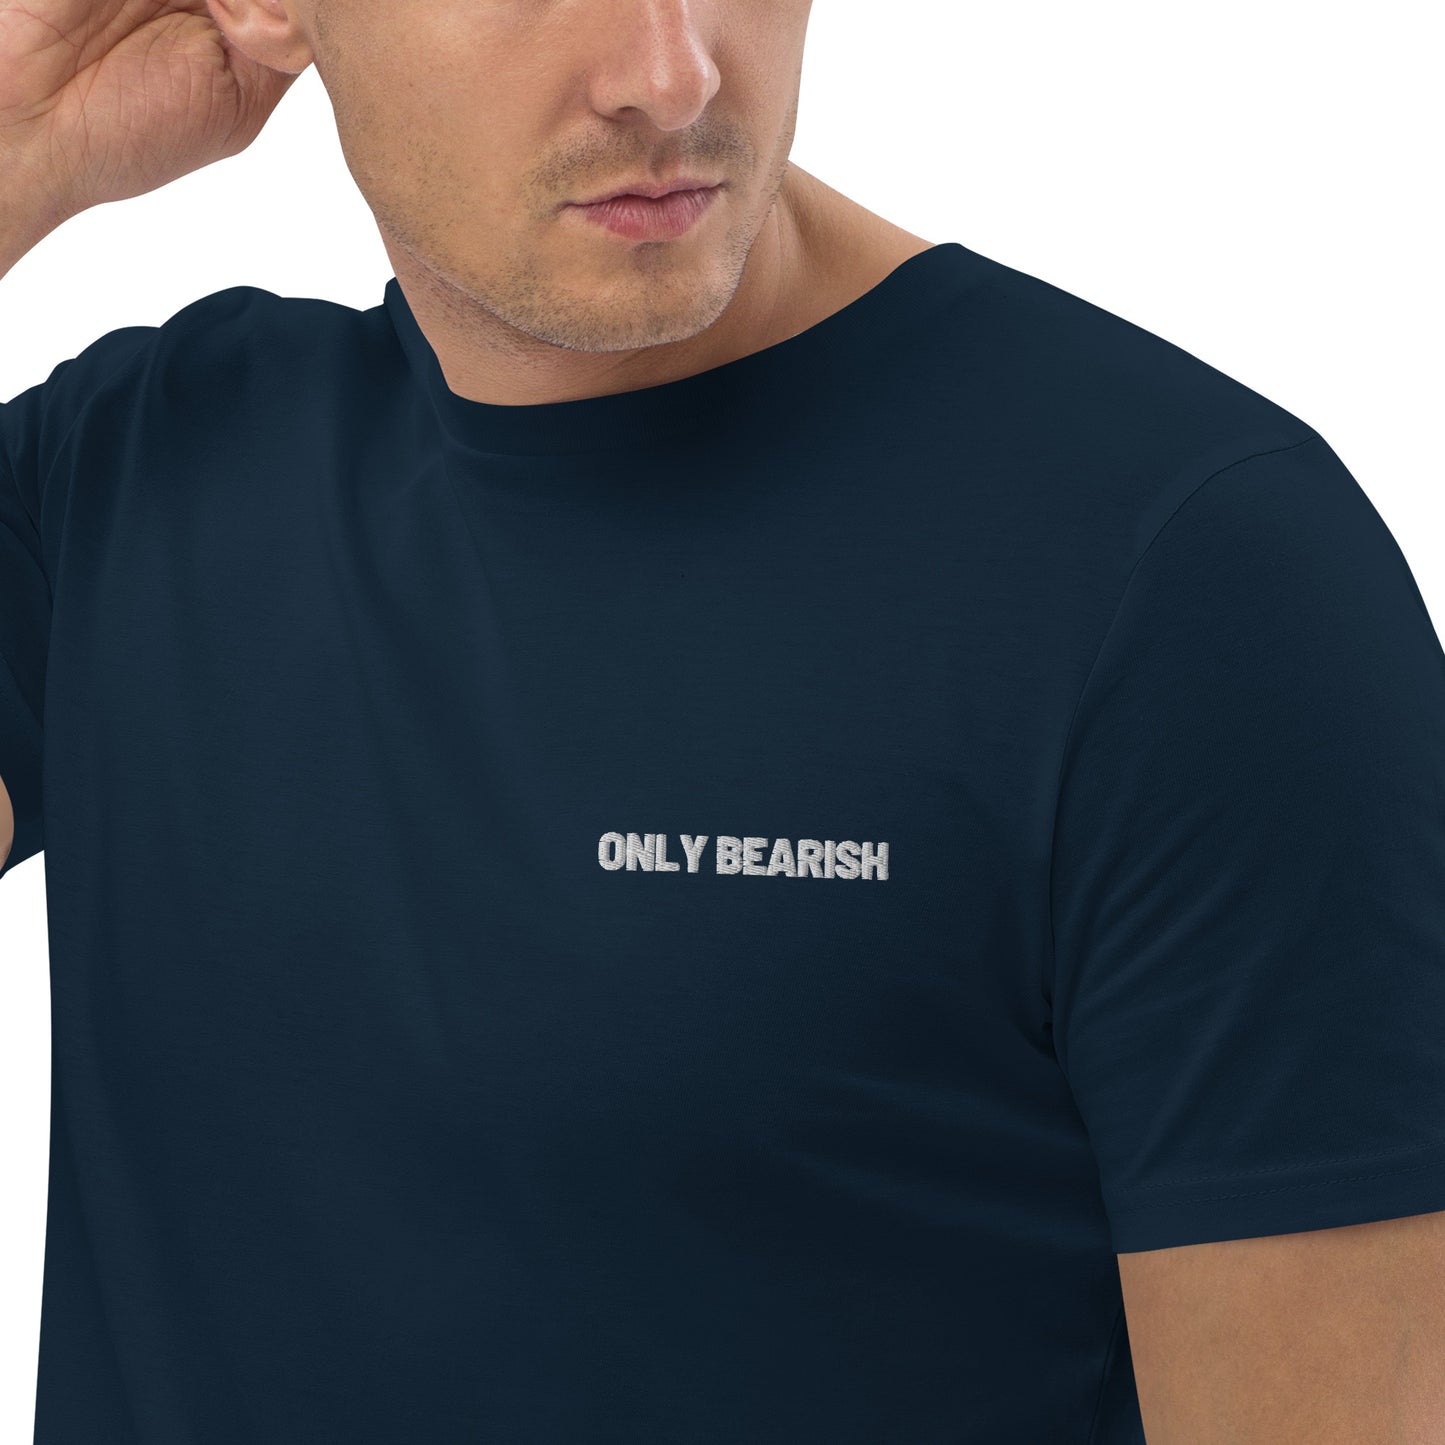 Only Bearish t-shirt